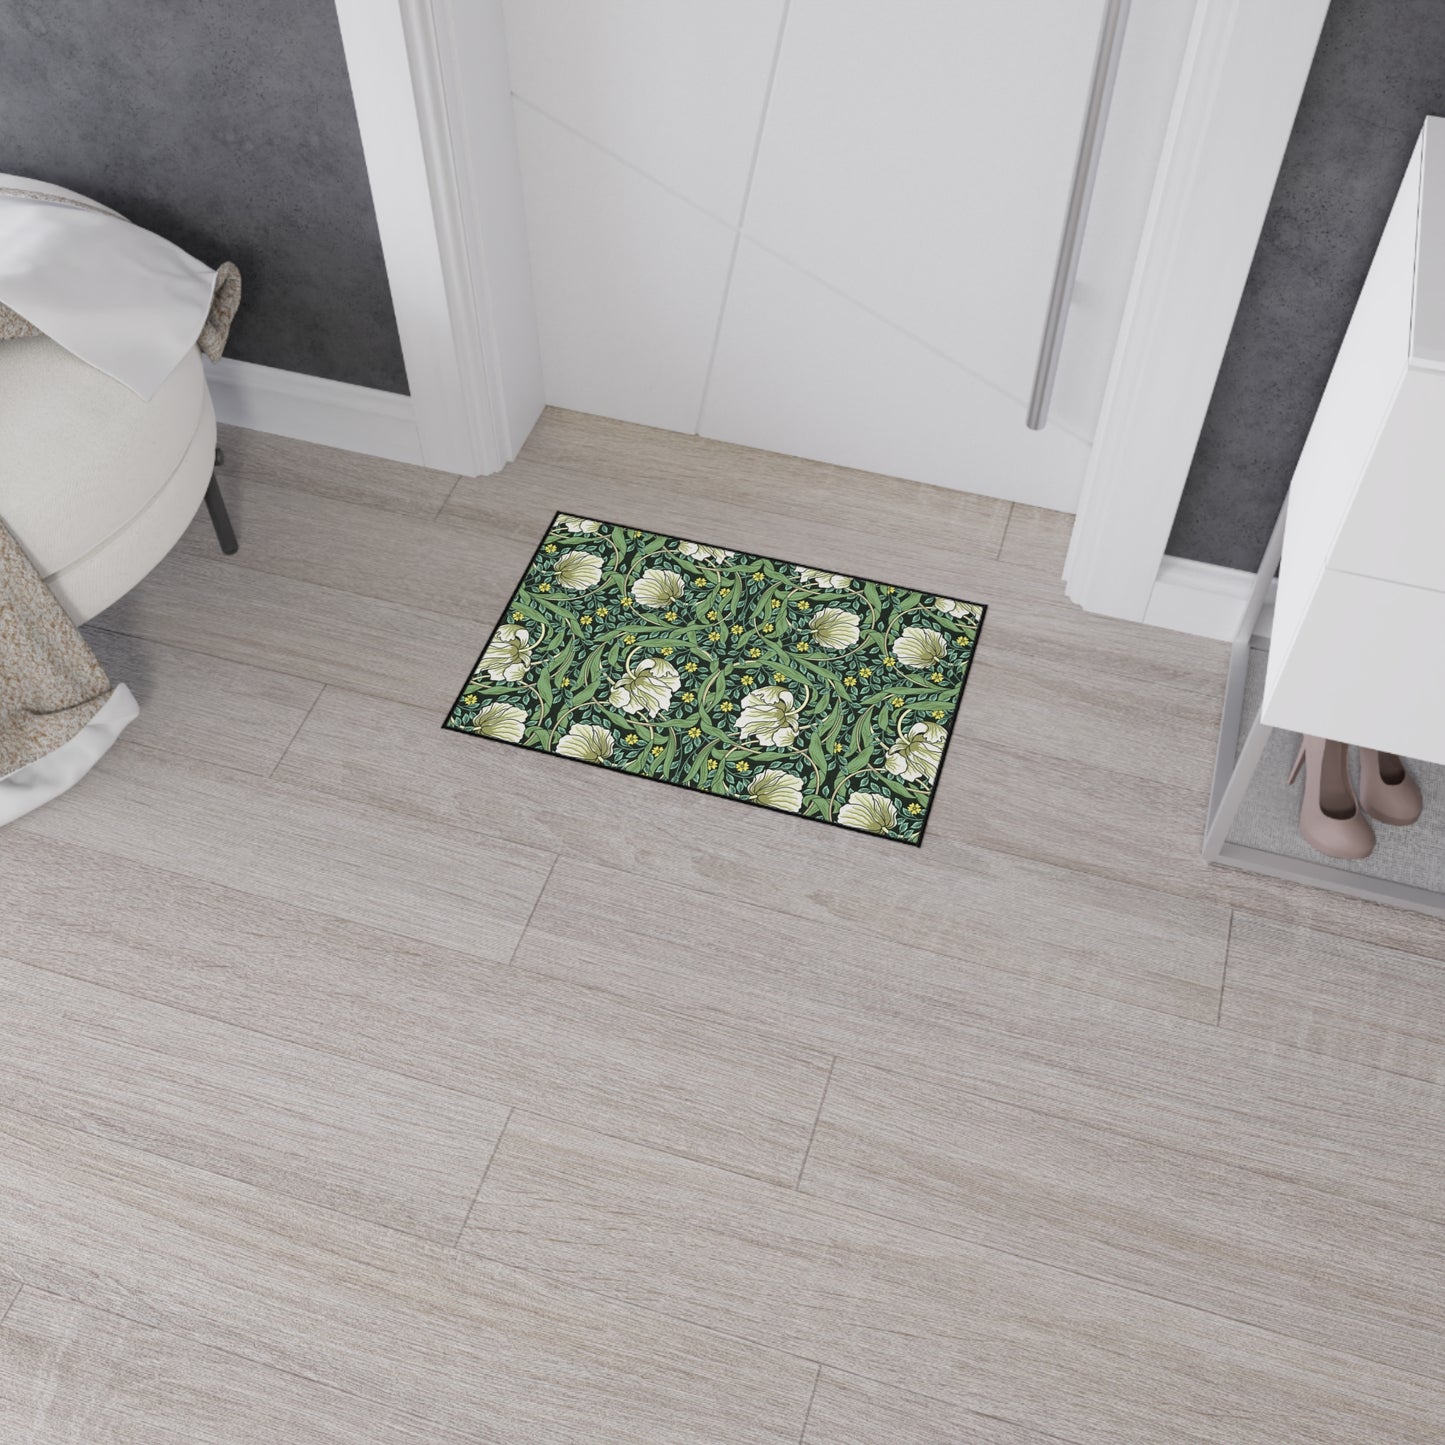 william-morris-co-heavy-duty-floor-mat-floor-mat-pimpernel-collection-green-25